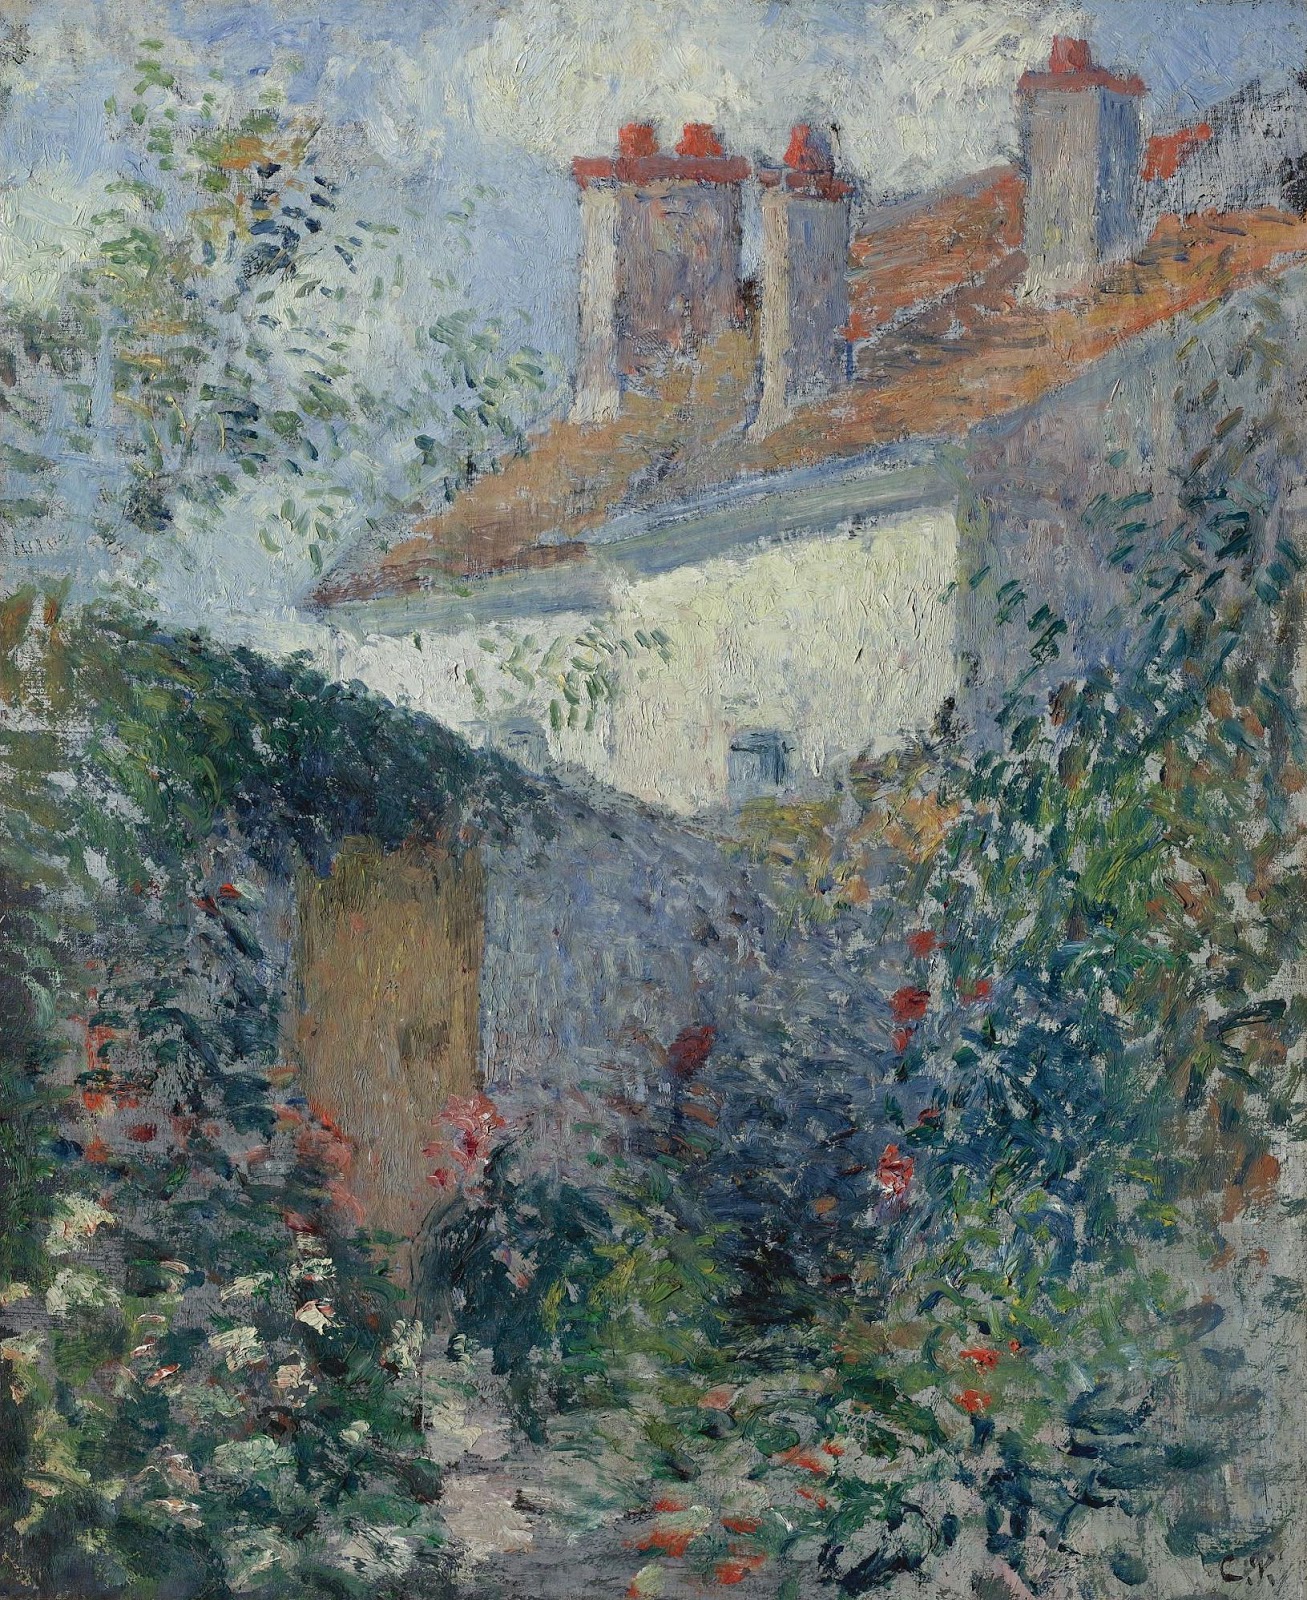 Camille+Pissarro-1830-1903 (426).jpg